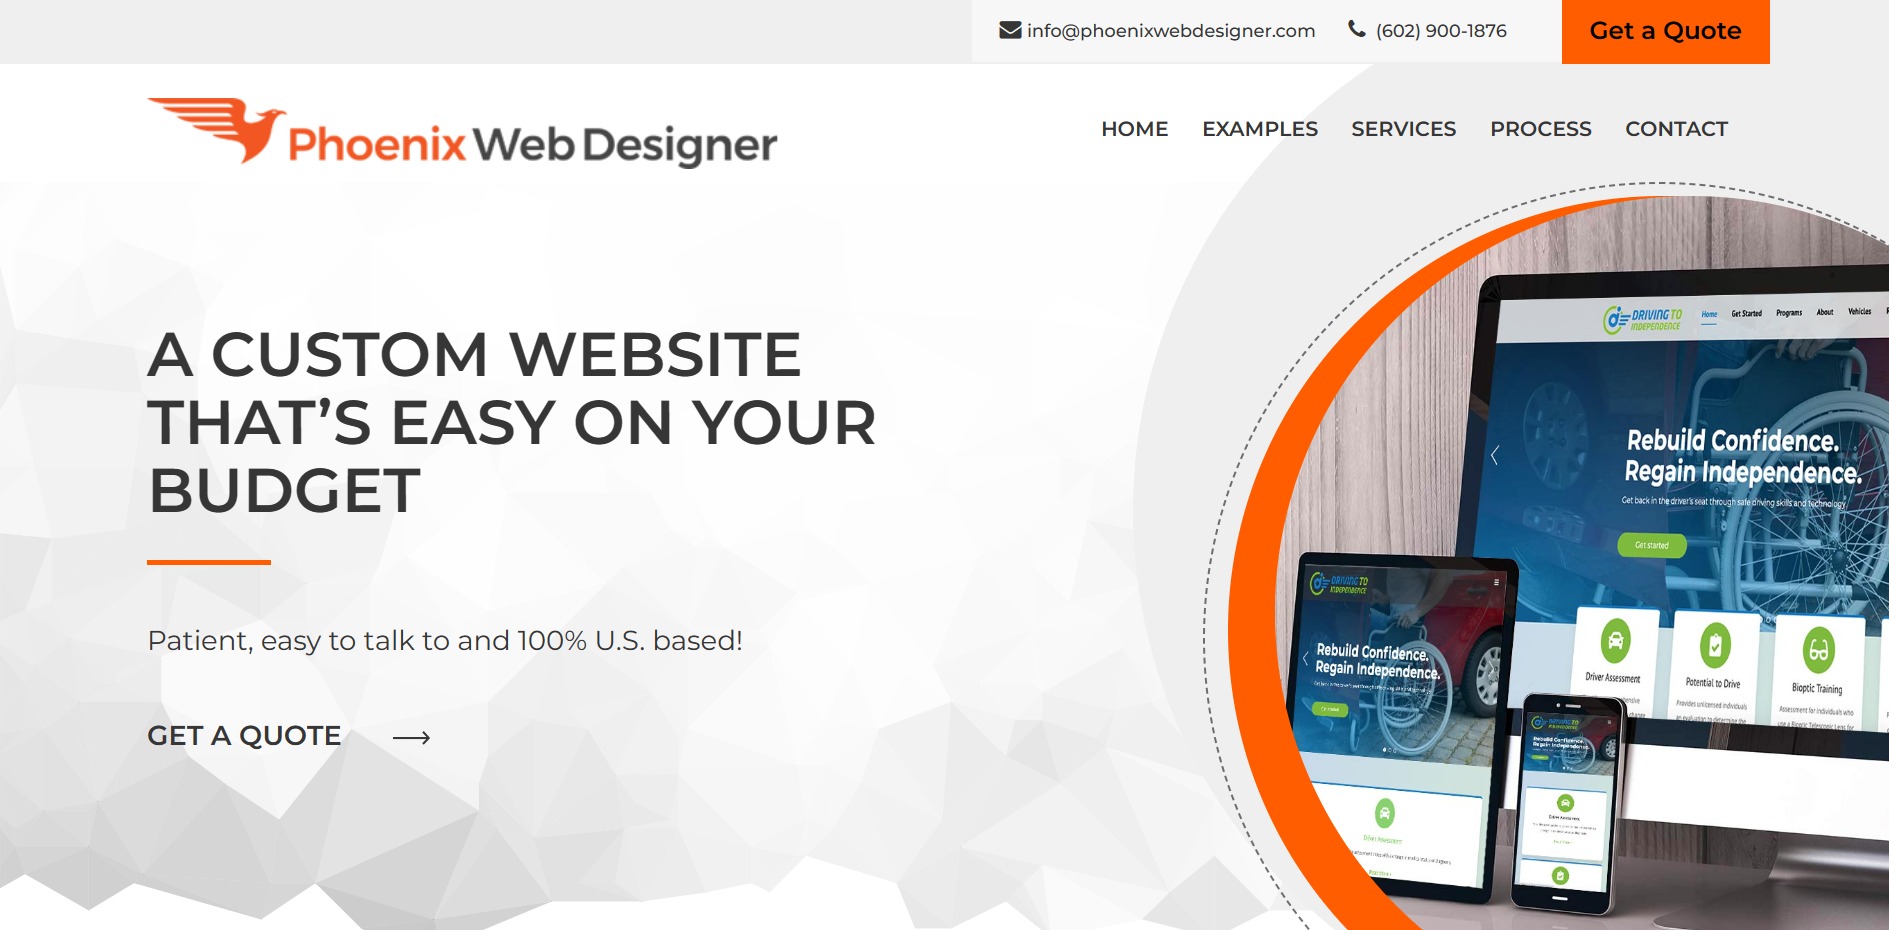 Phoenix Web Designer